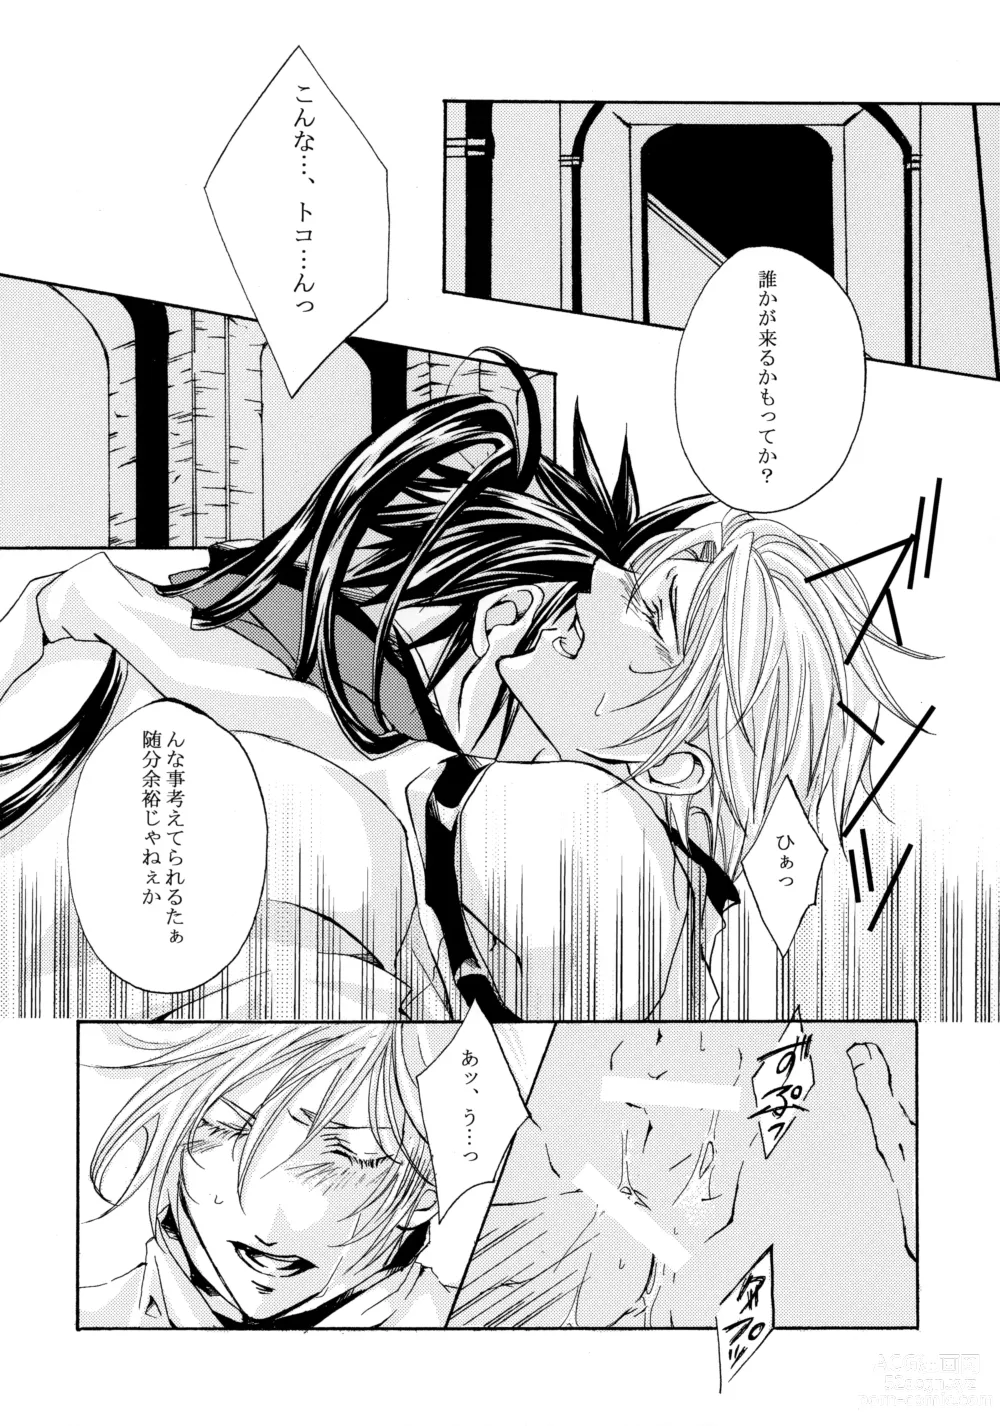 Page 7 of doujinshi Hone made Aishite